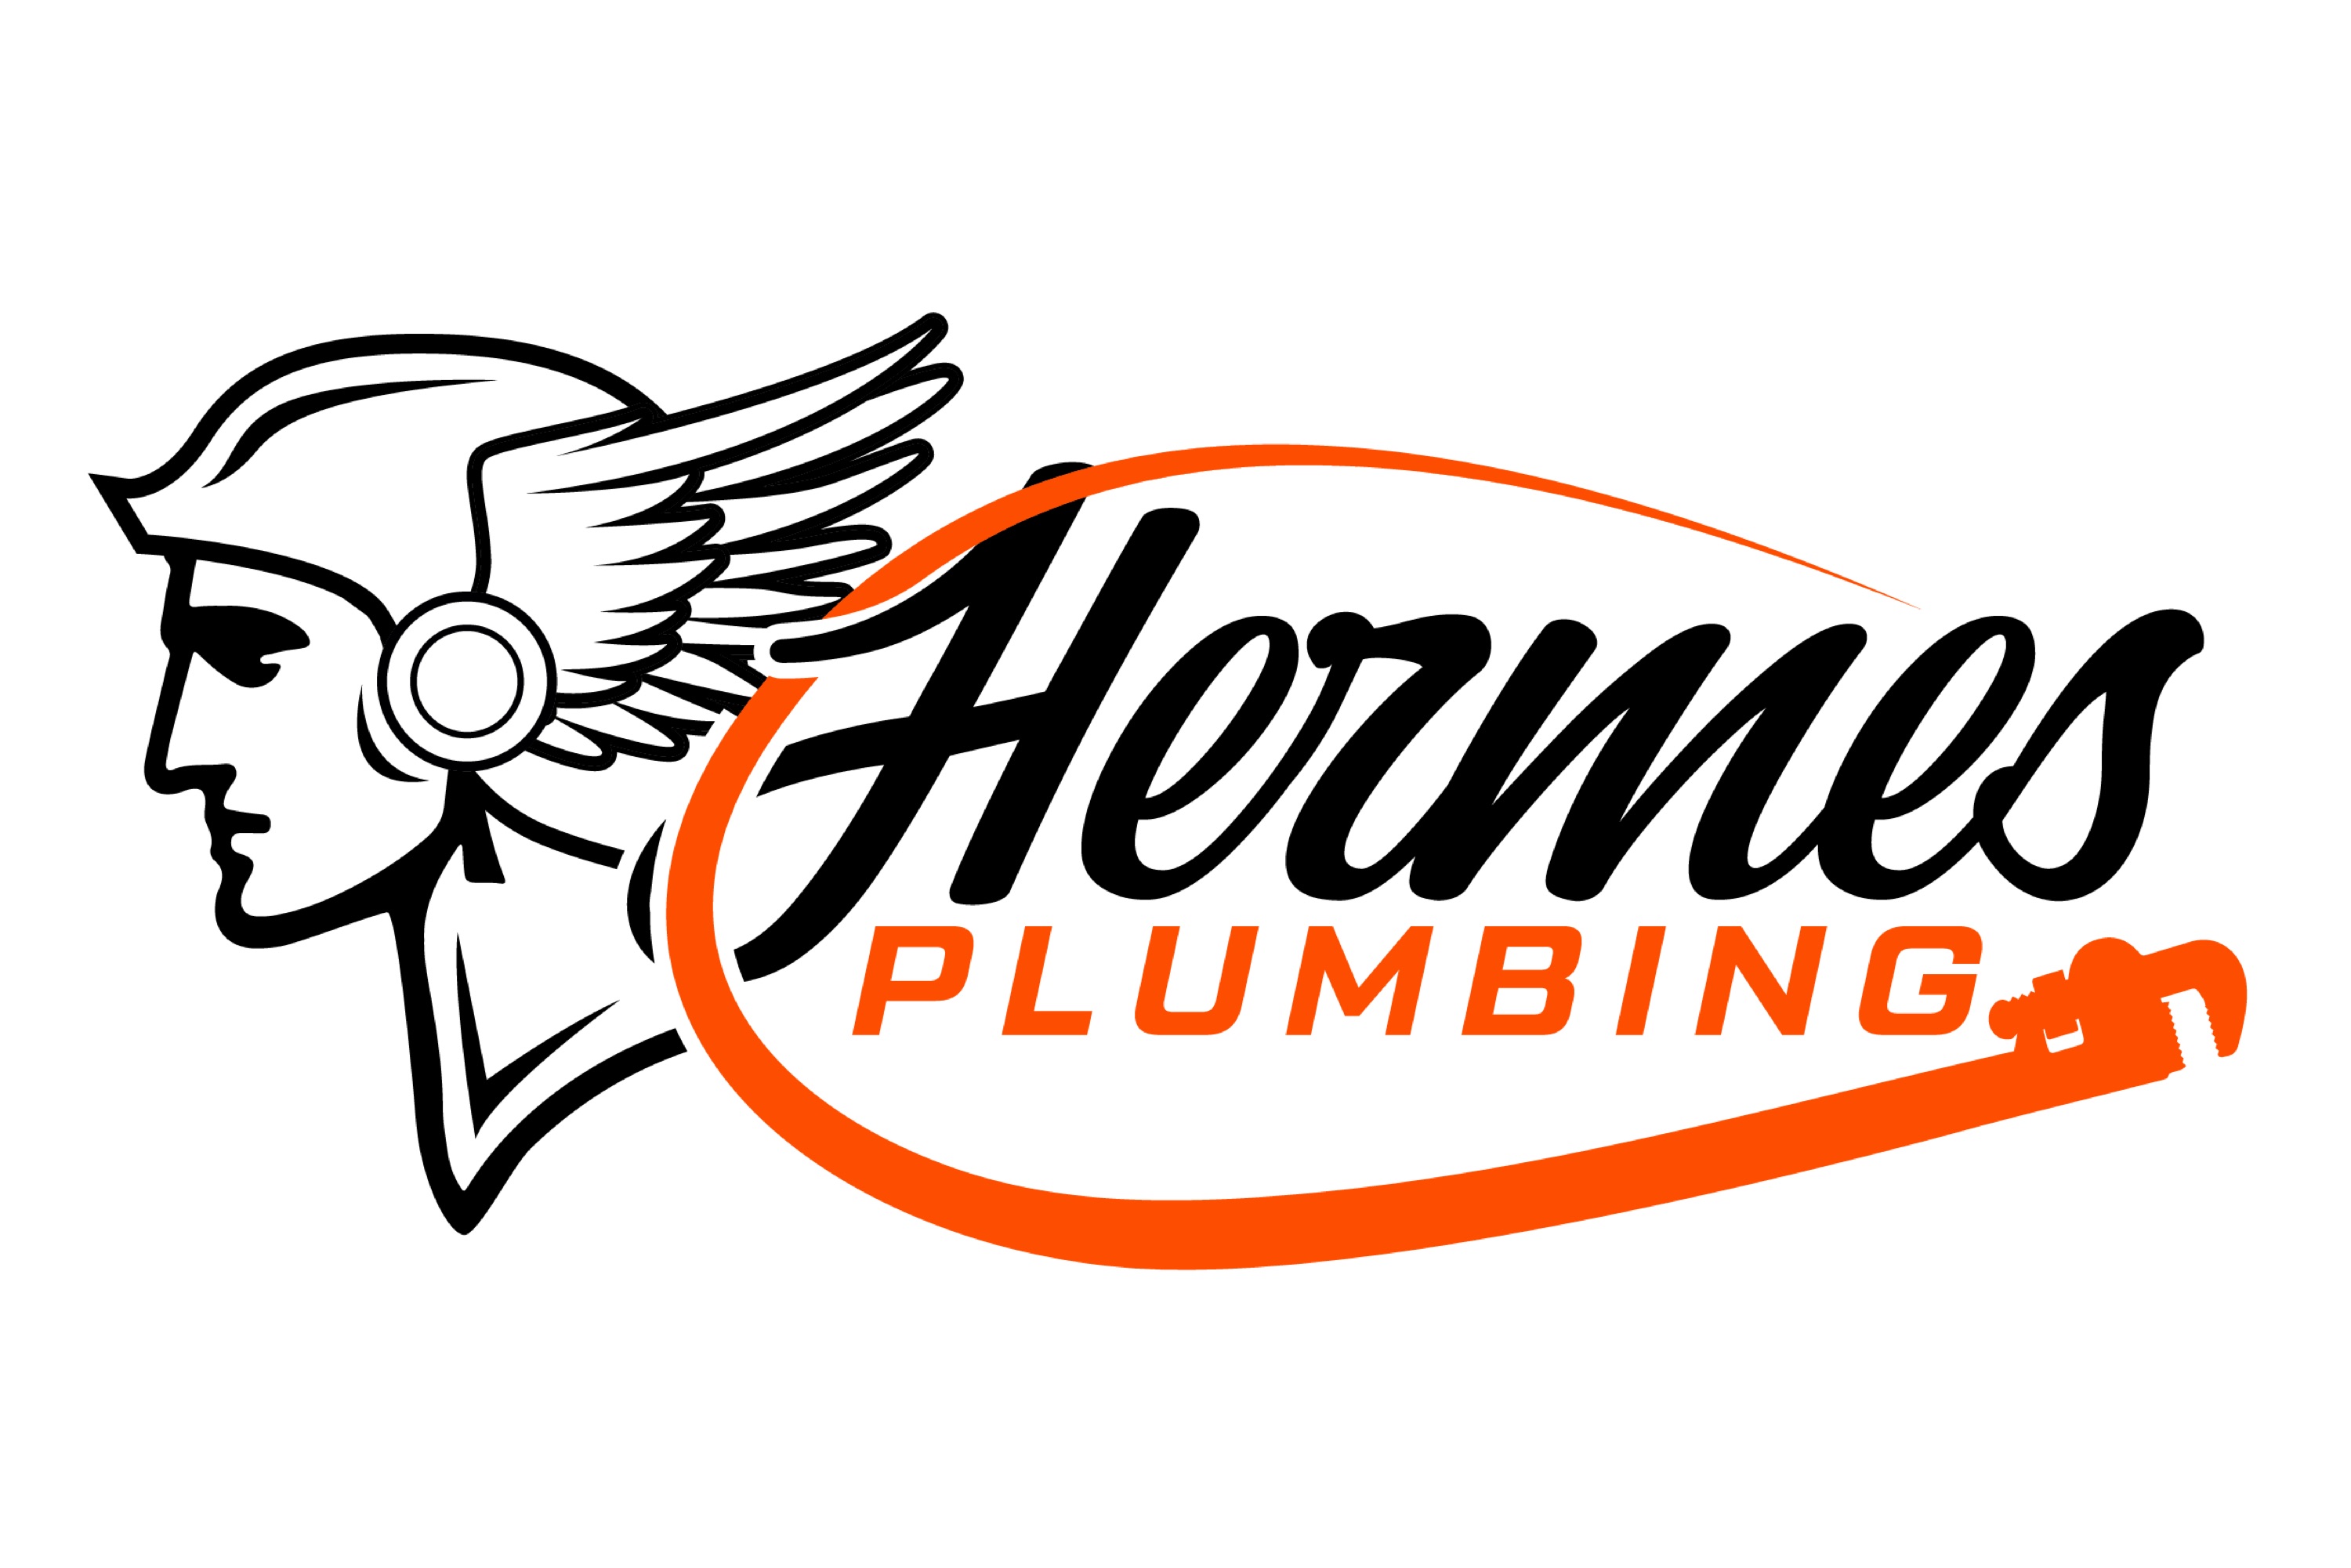 Herme's Plumbing Logo